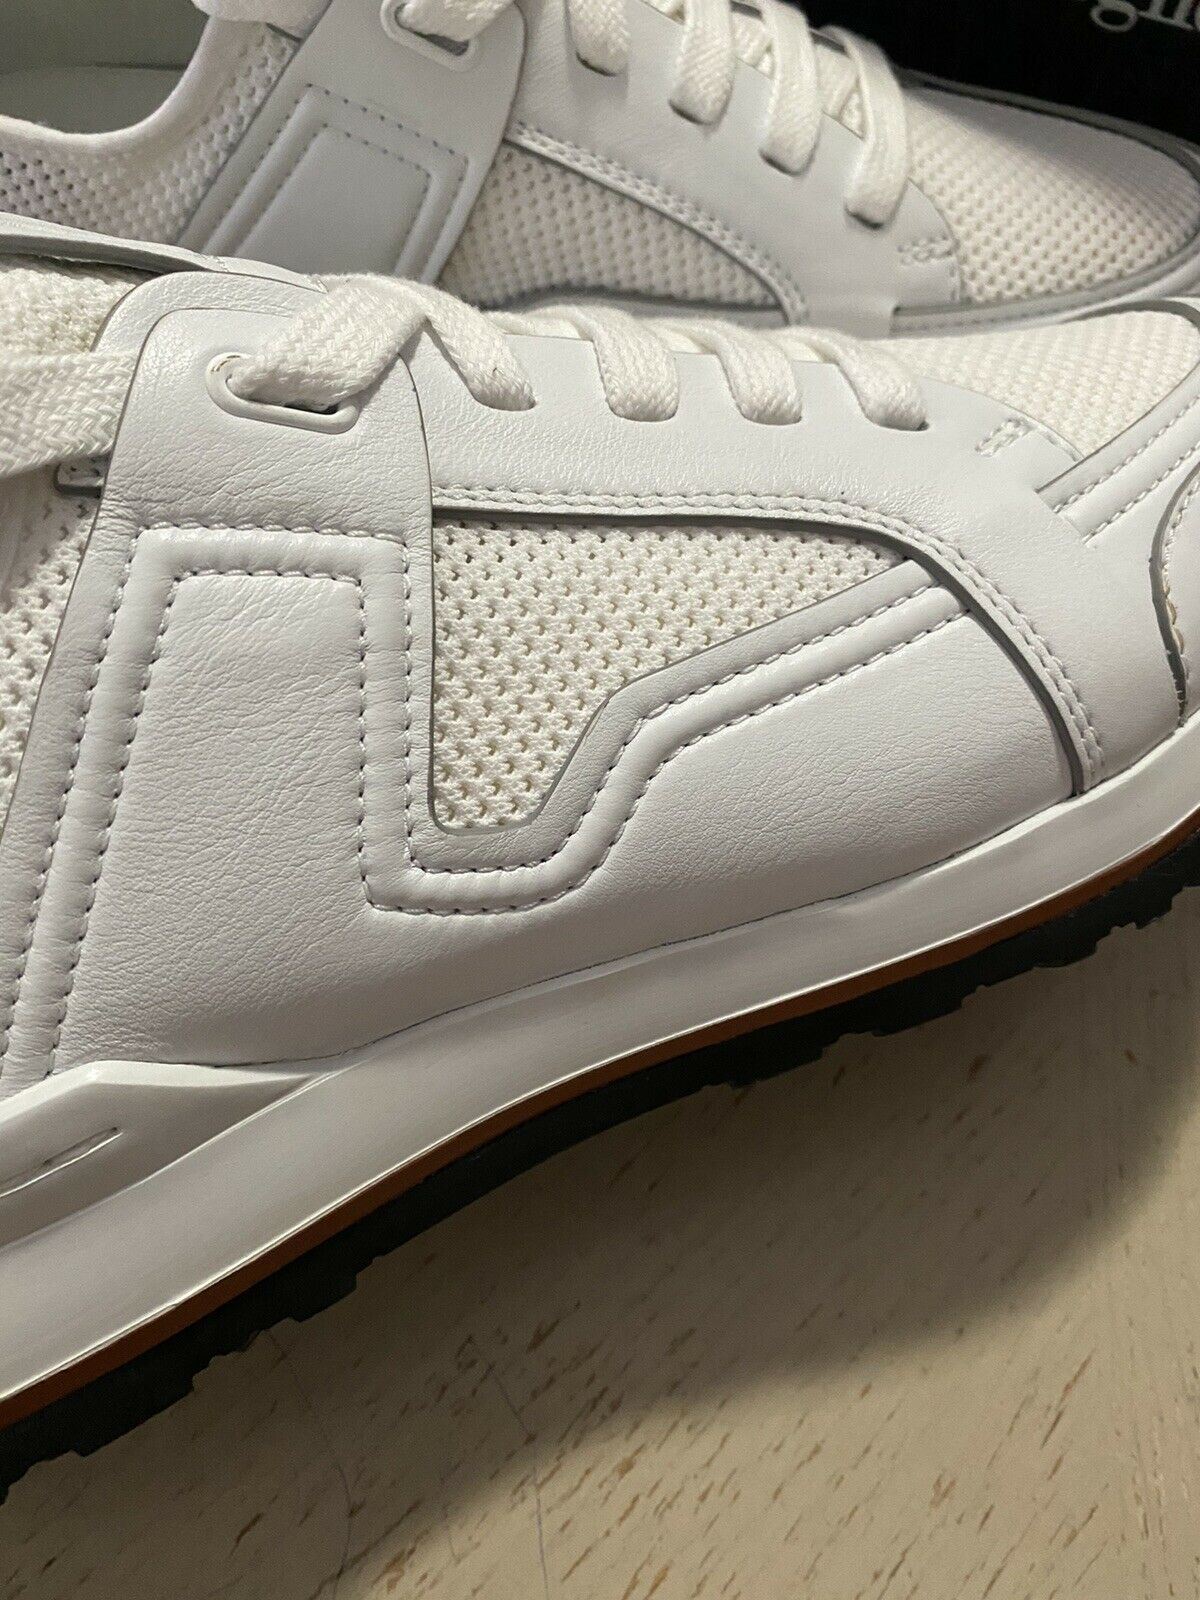 New $775 Ermenegildo Zegna Leather Sneakers Shoes White 11 US Italy